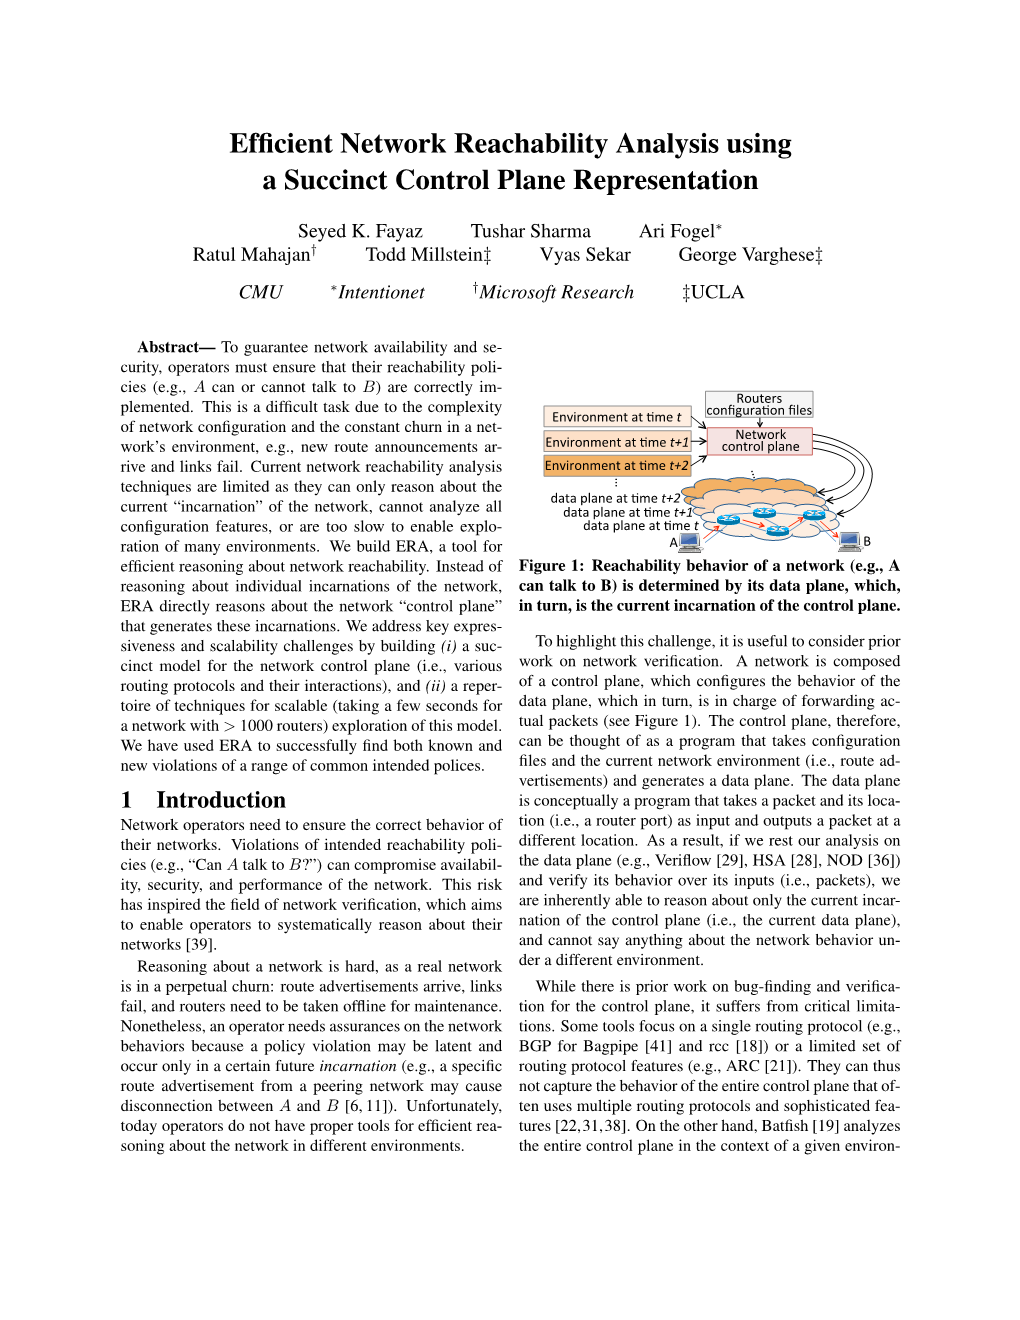 Efficient Network Reachability Analysis Using a Succinct Control Plane Representation